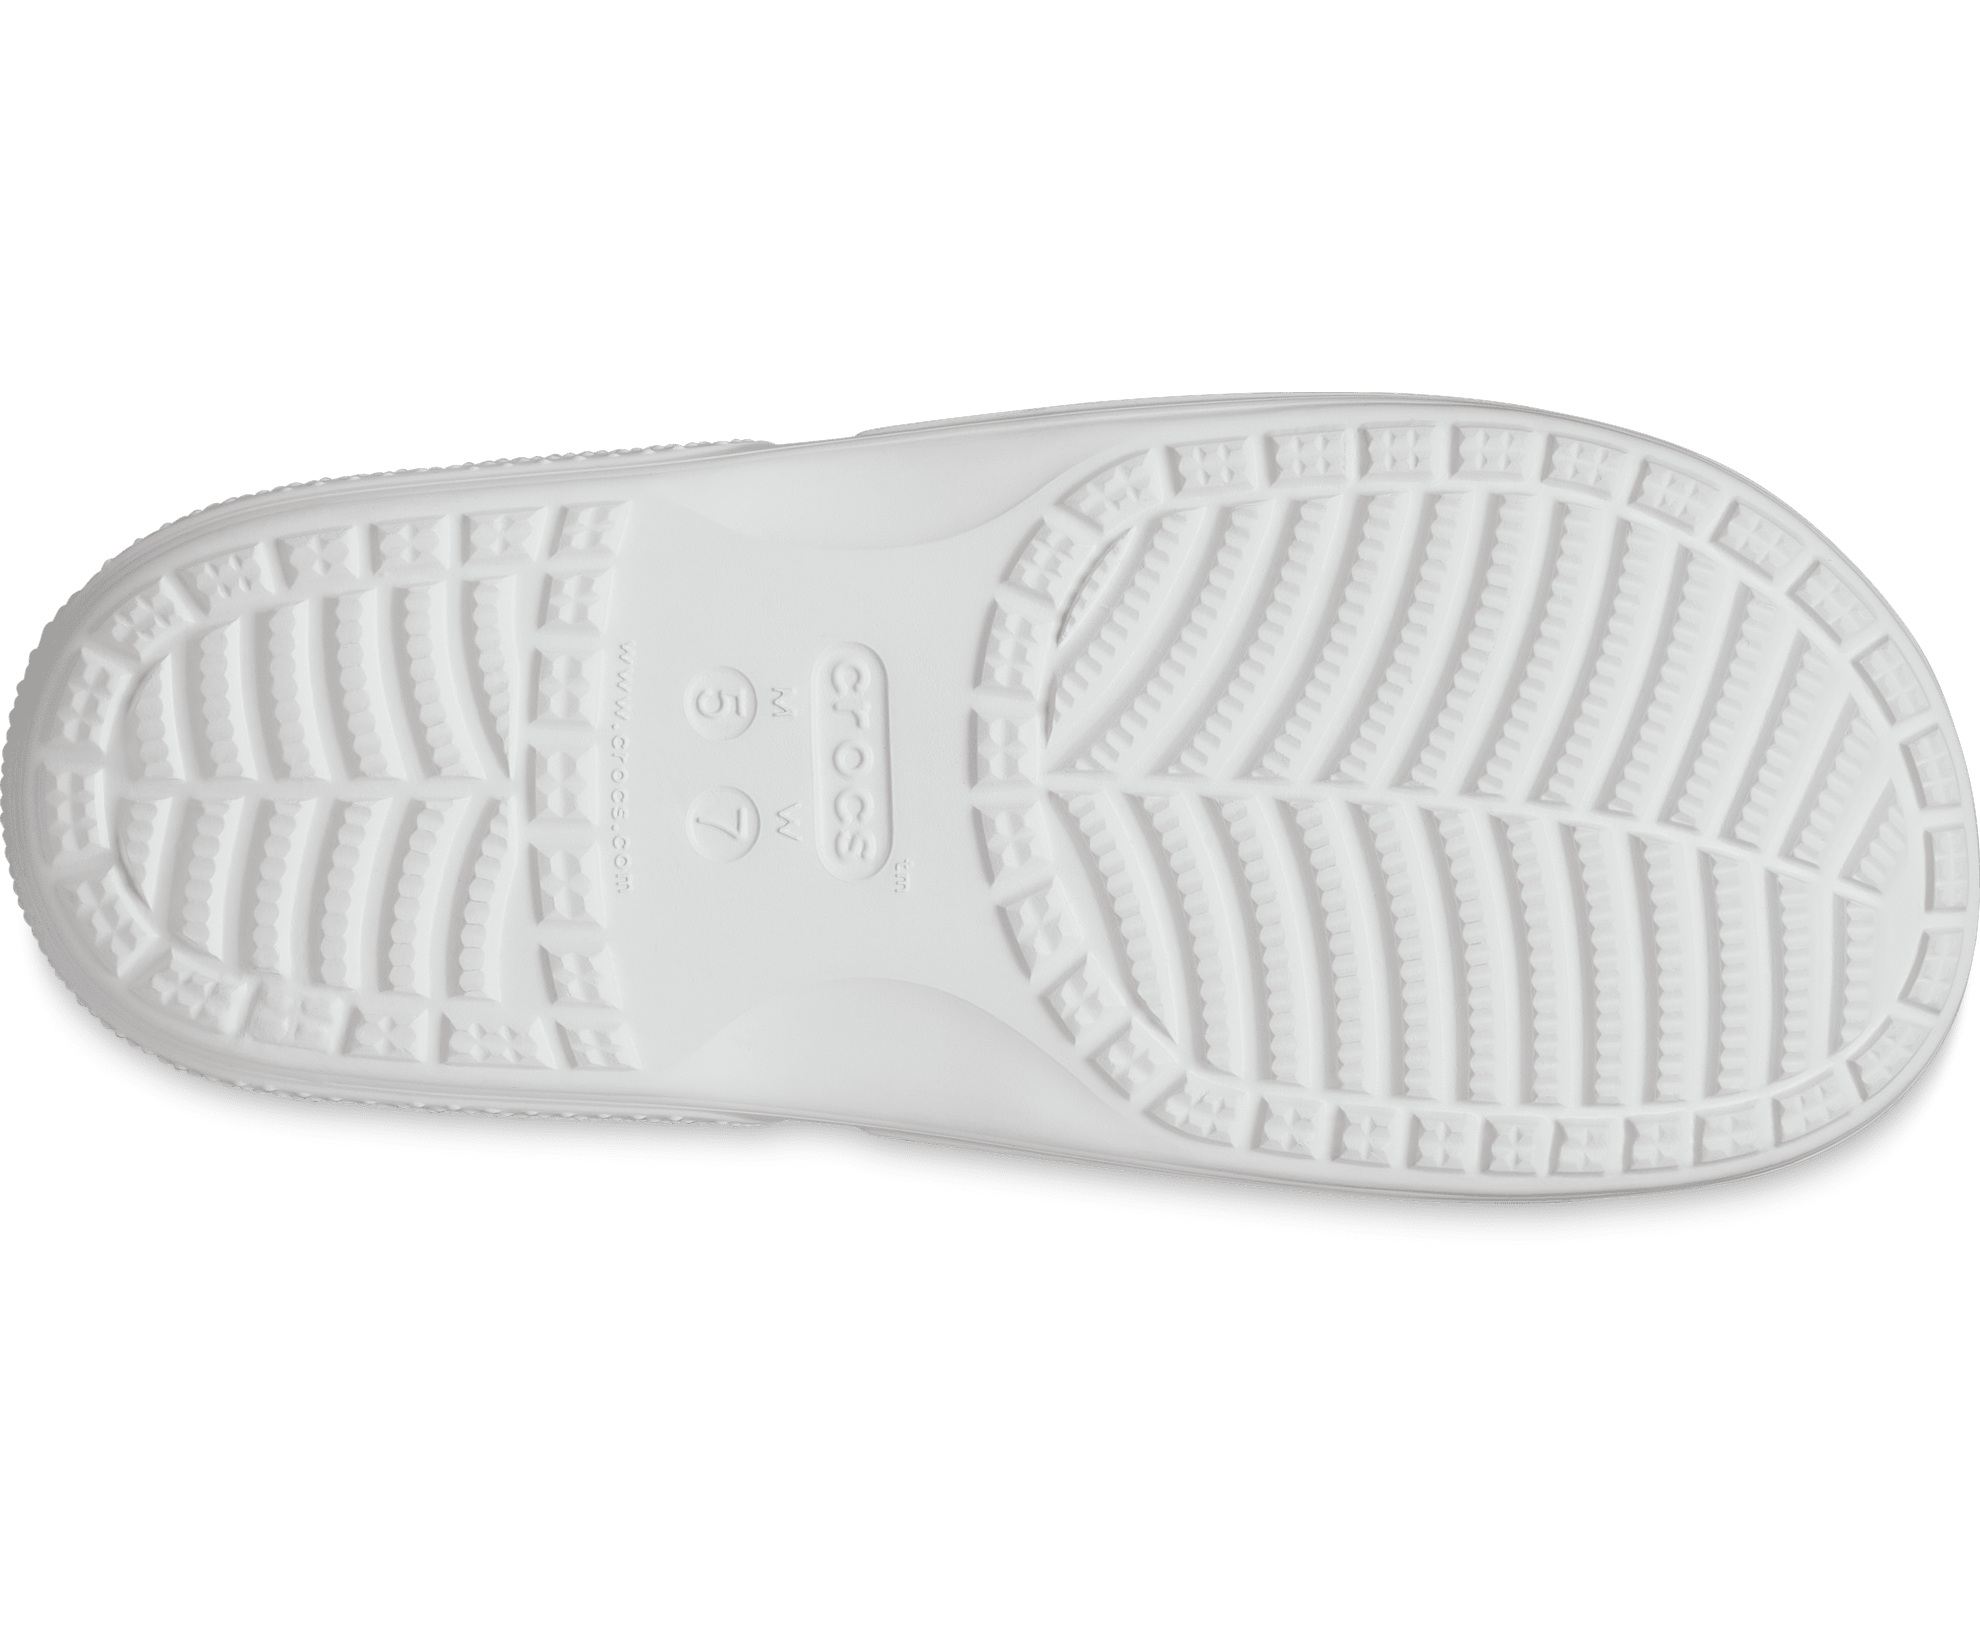 Crocs Unisex Classic Tie Dye Slide - White - The Foot Factory